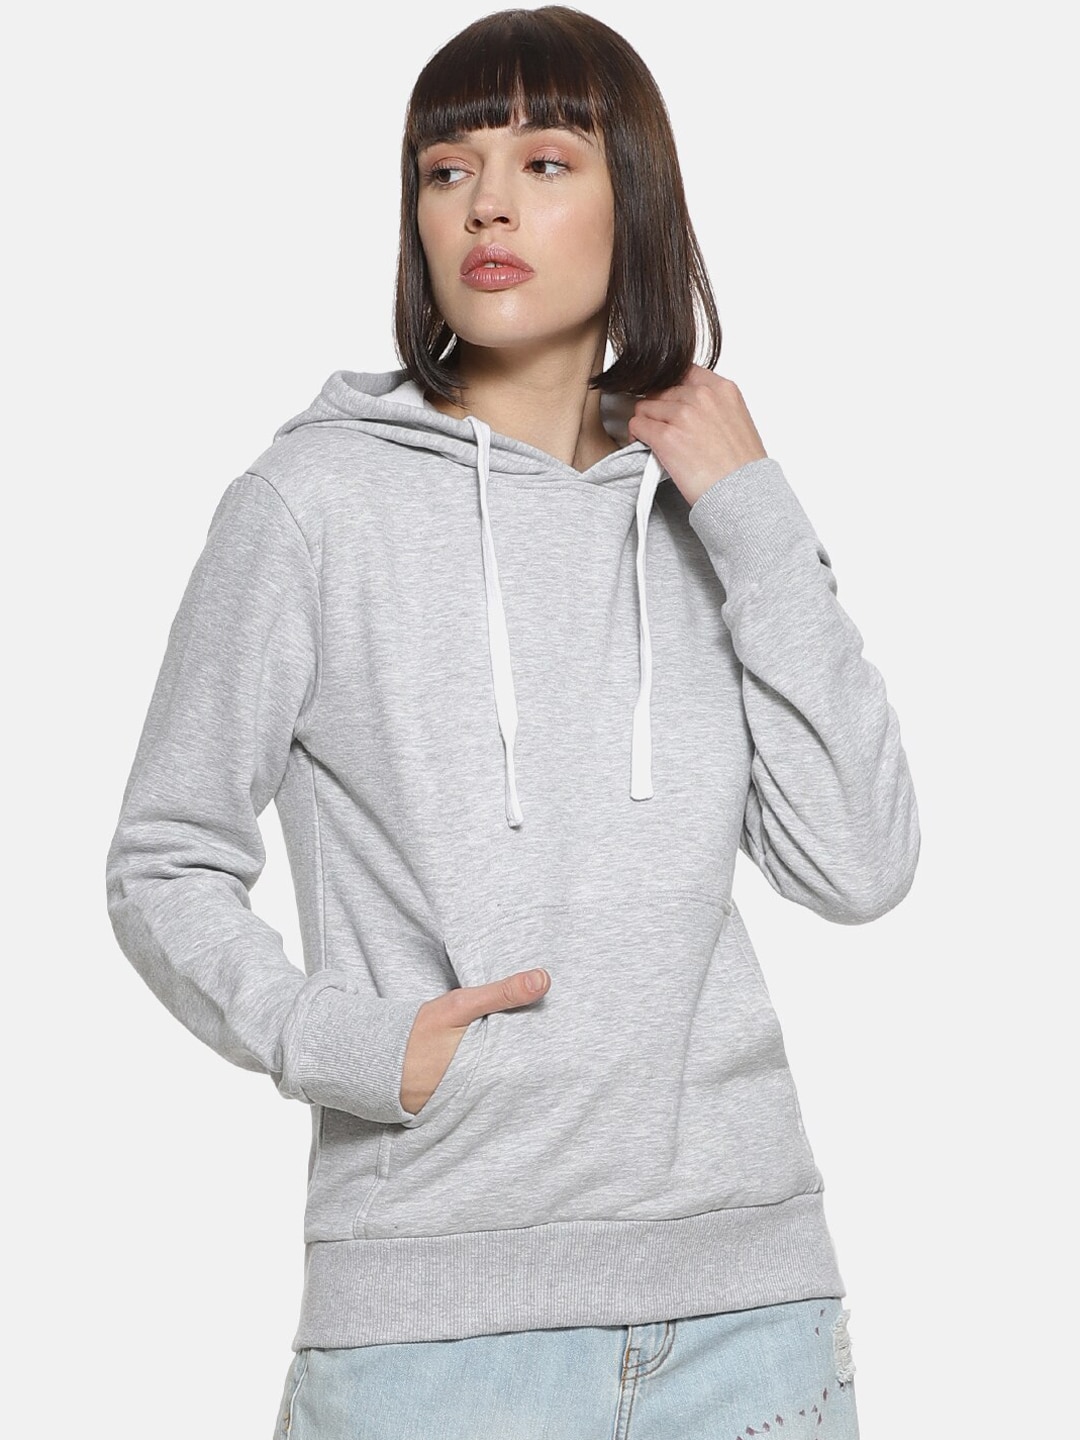 Campus Sutra Women Grey Hooded Sweatshirt Price in India